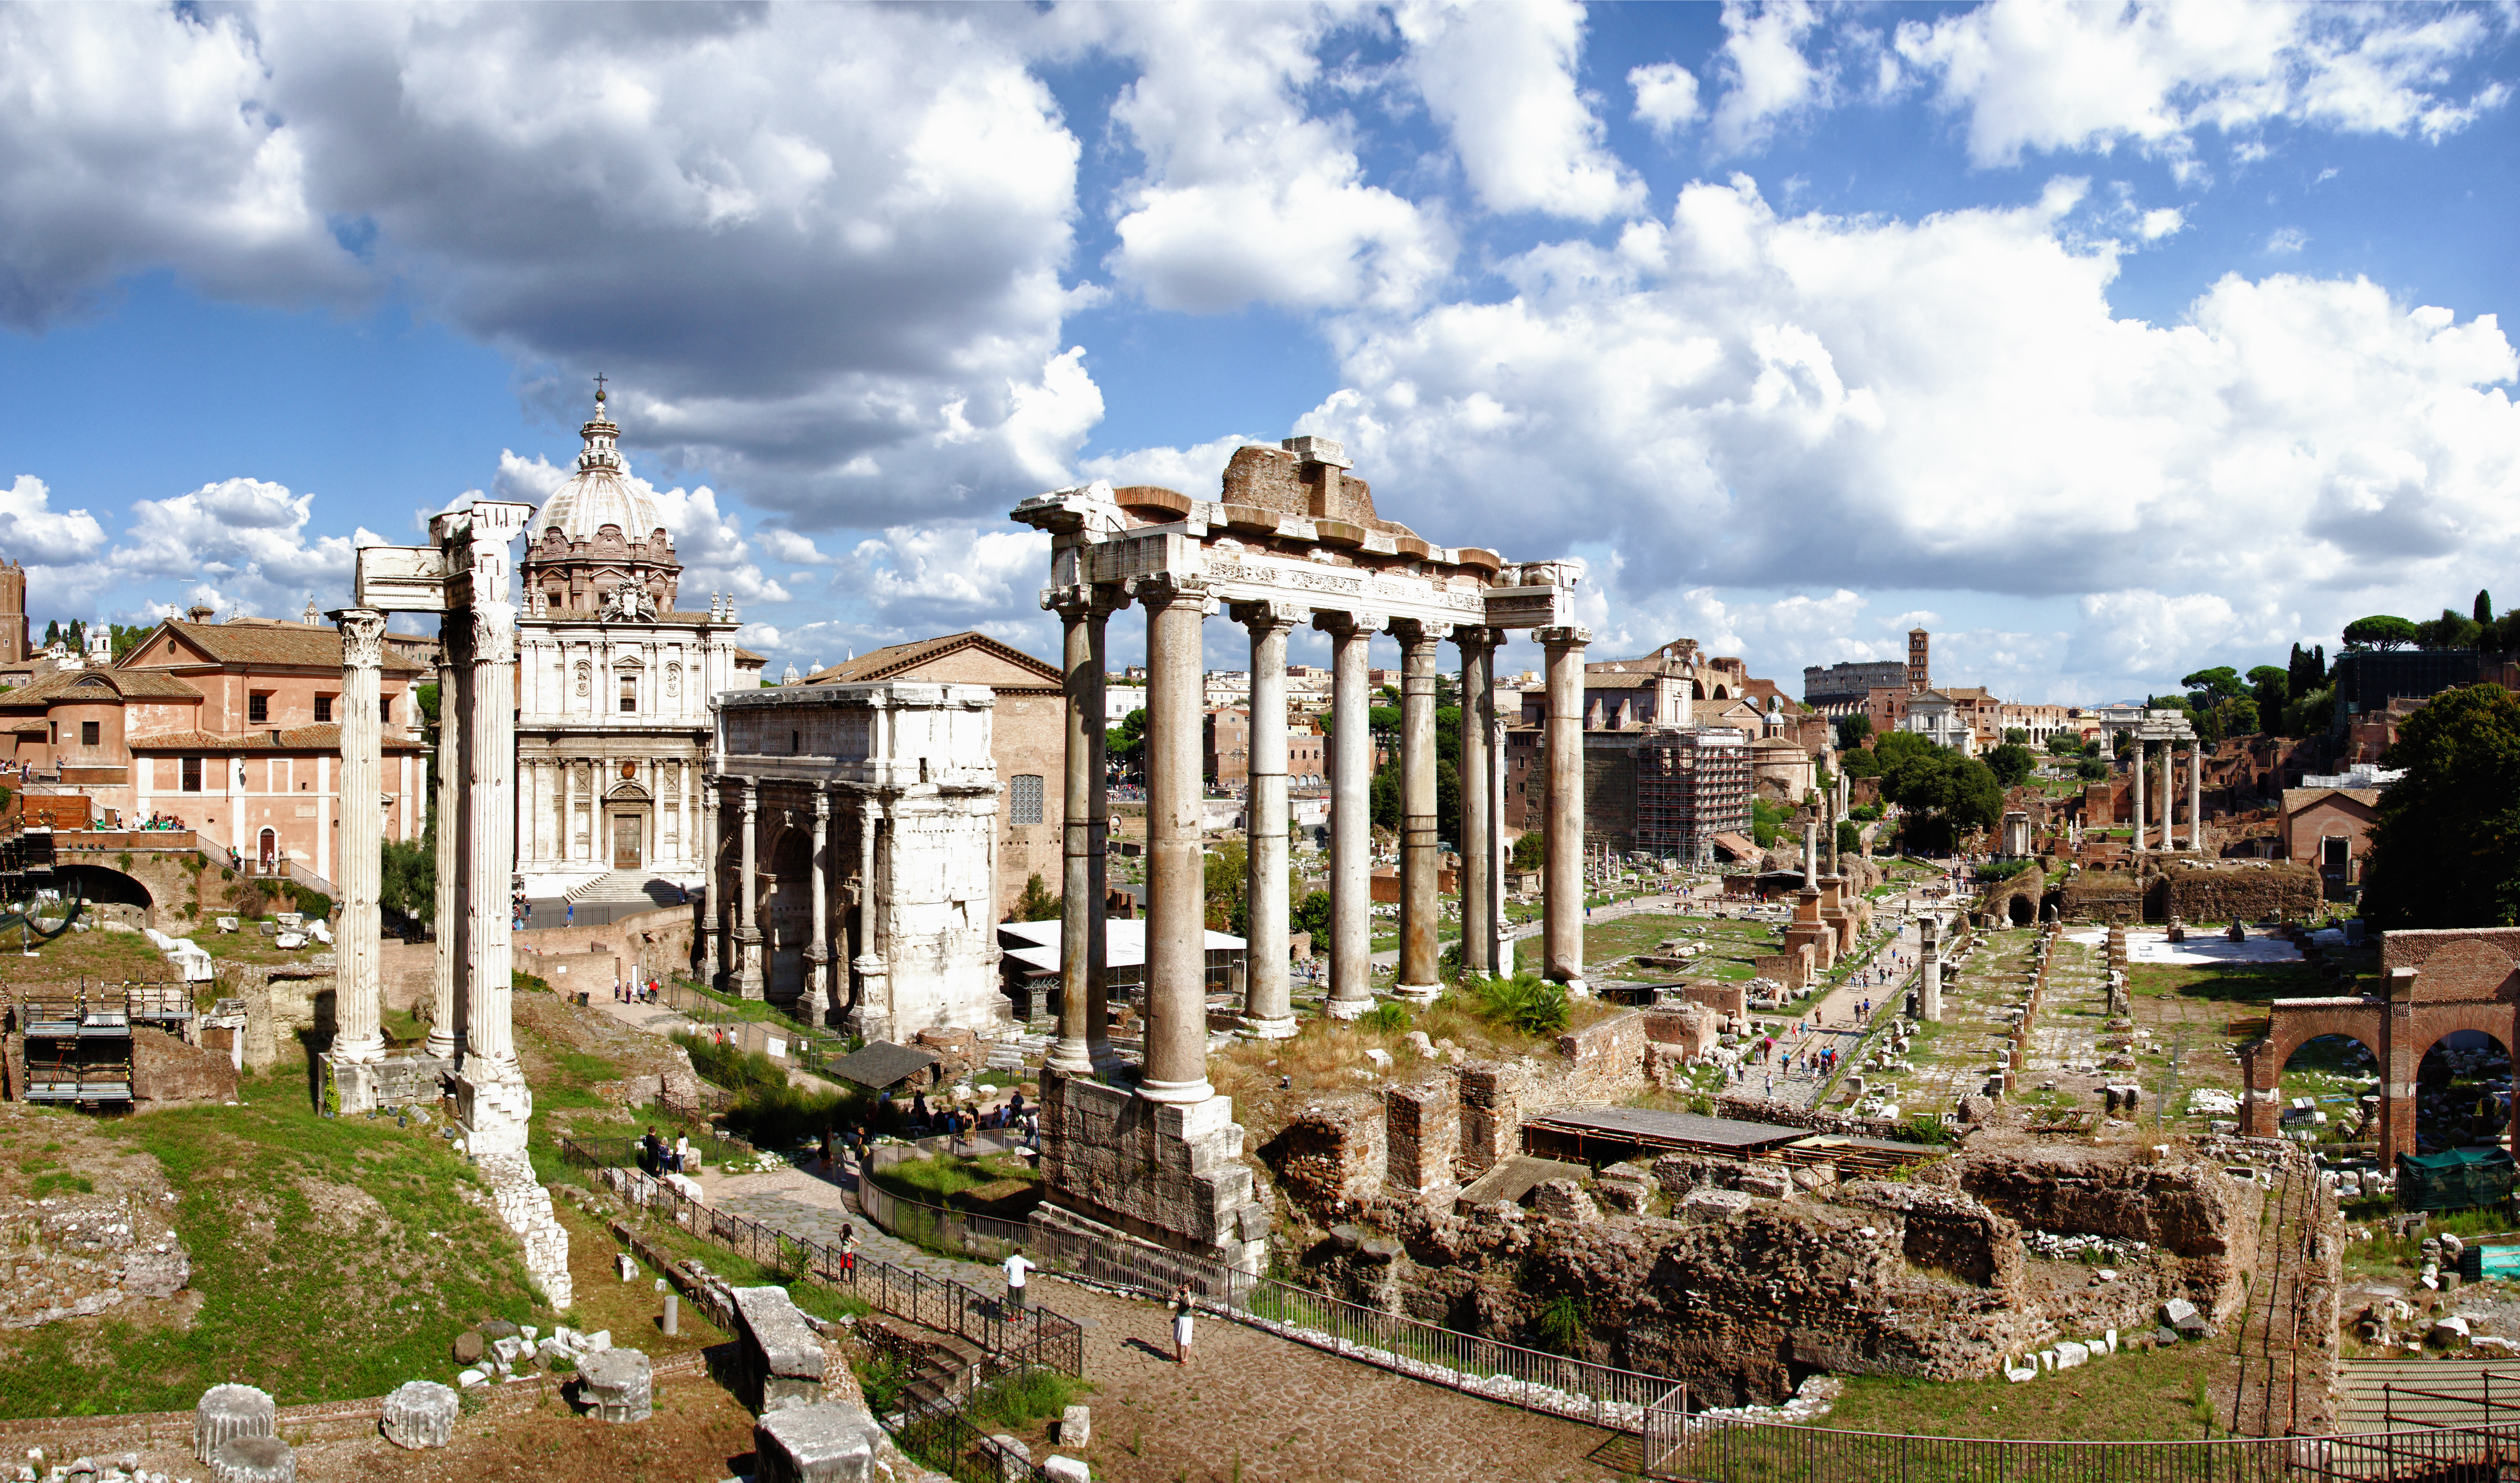 File:Foro Romano Forum Romanum Roman Forum (8043630550).jpg - Wikimedia Commons